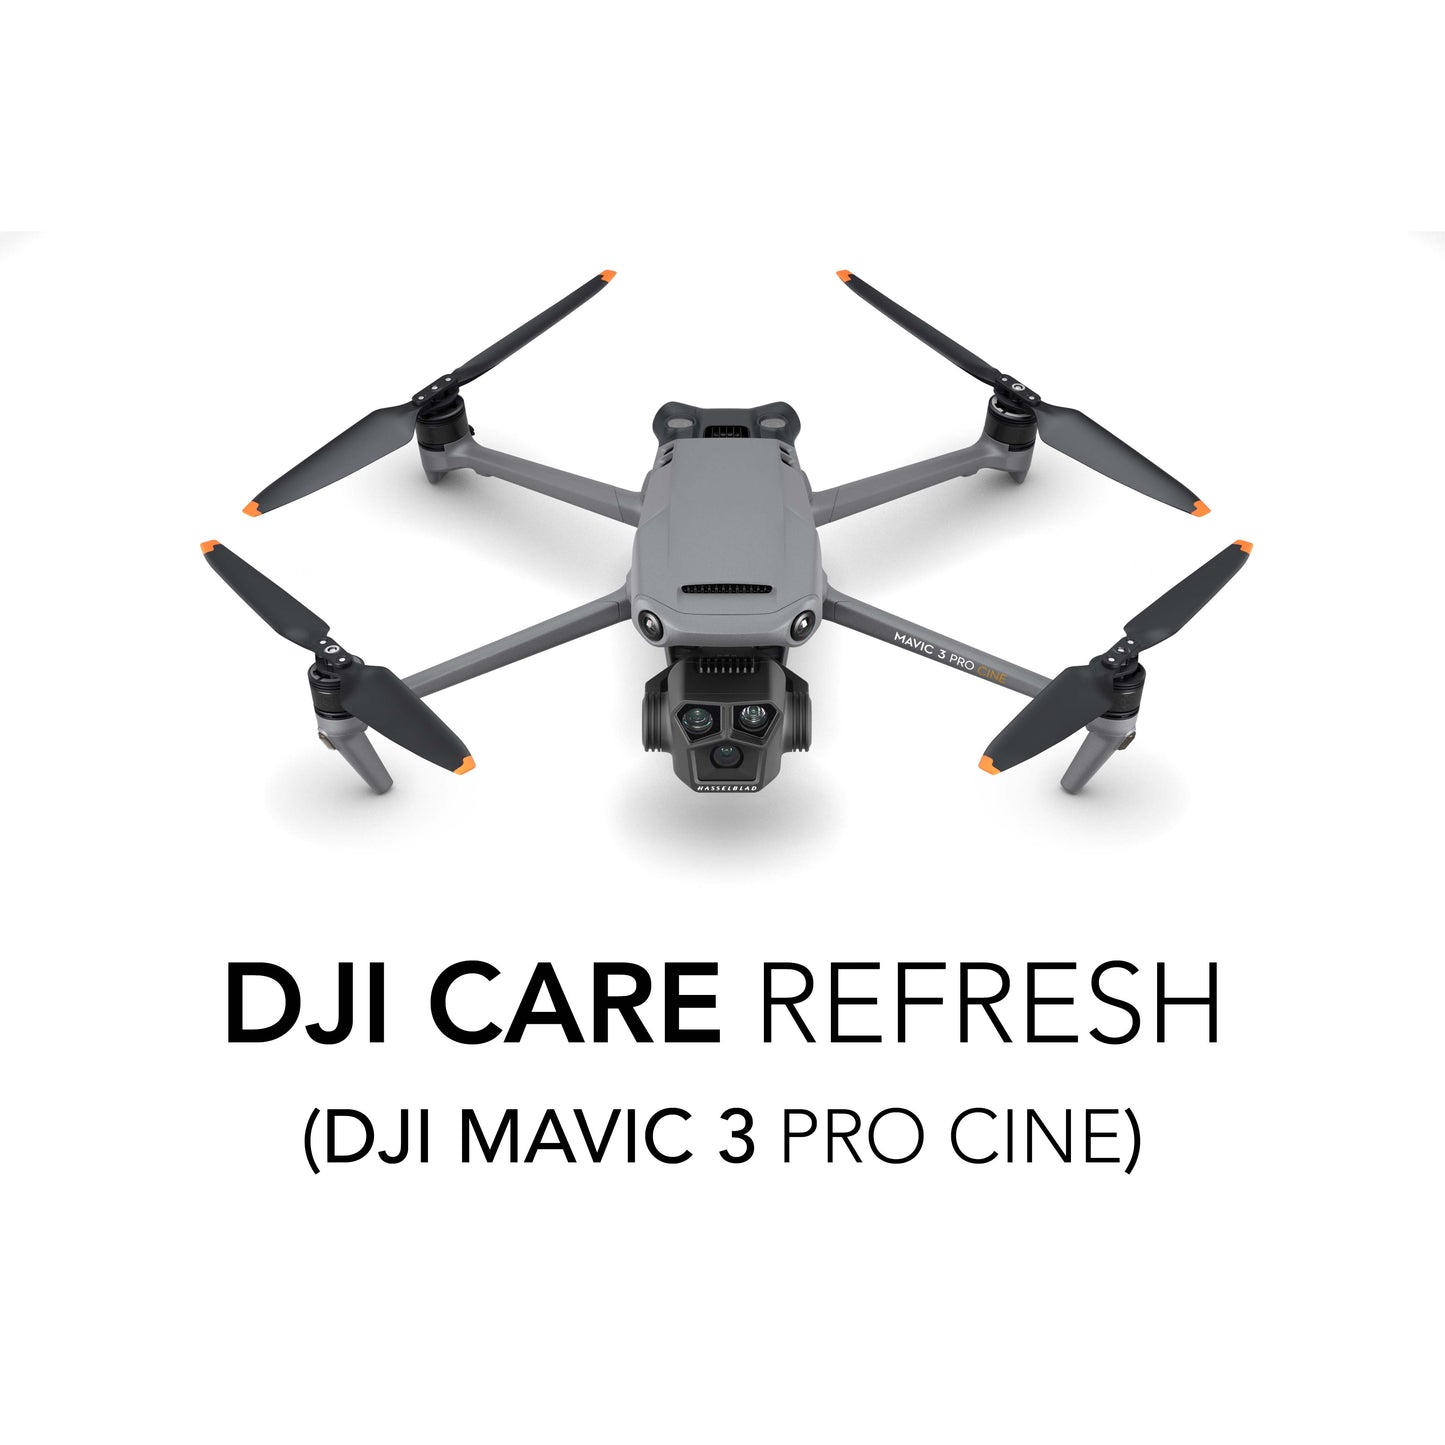 Card DJI Care Refresh 2-Year Plan (DJI Mavic 3 Pro Cine) EU